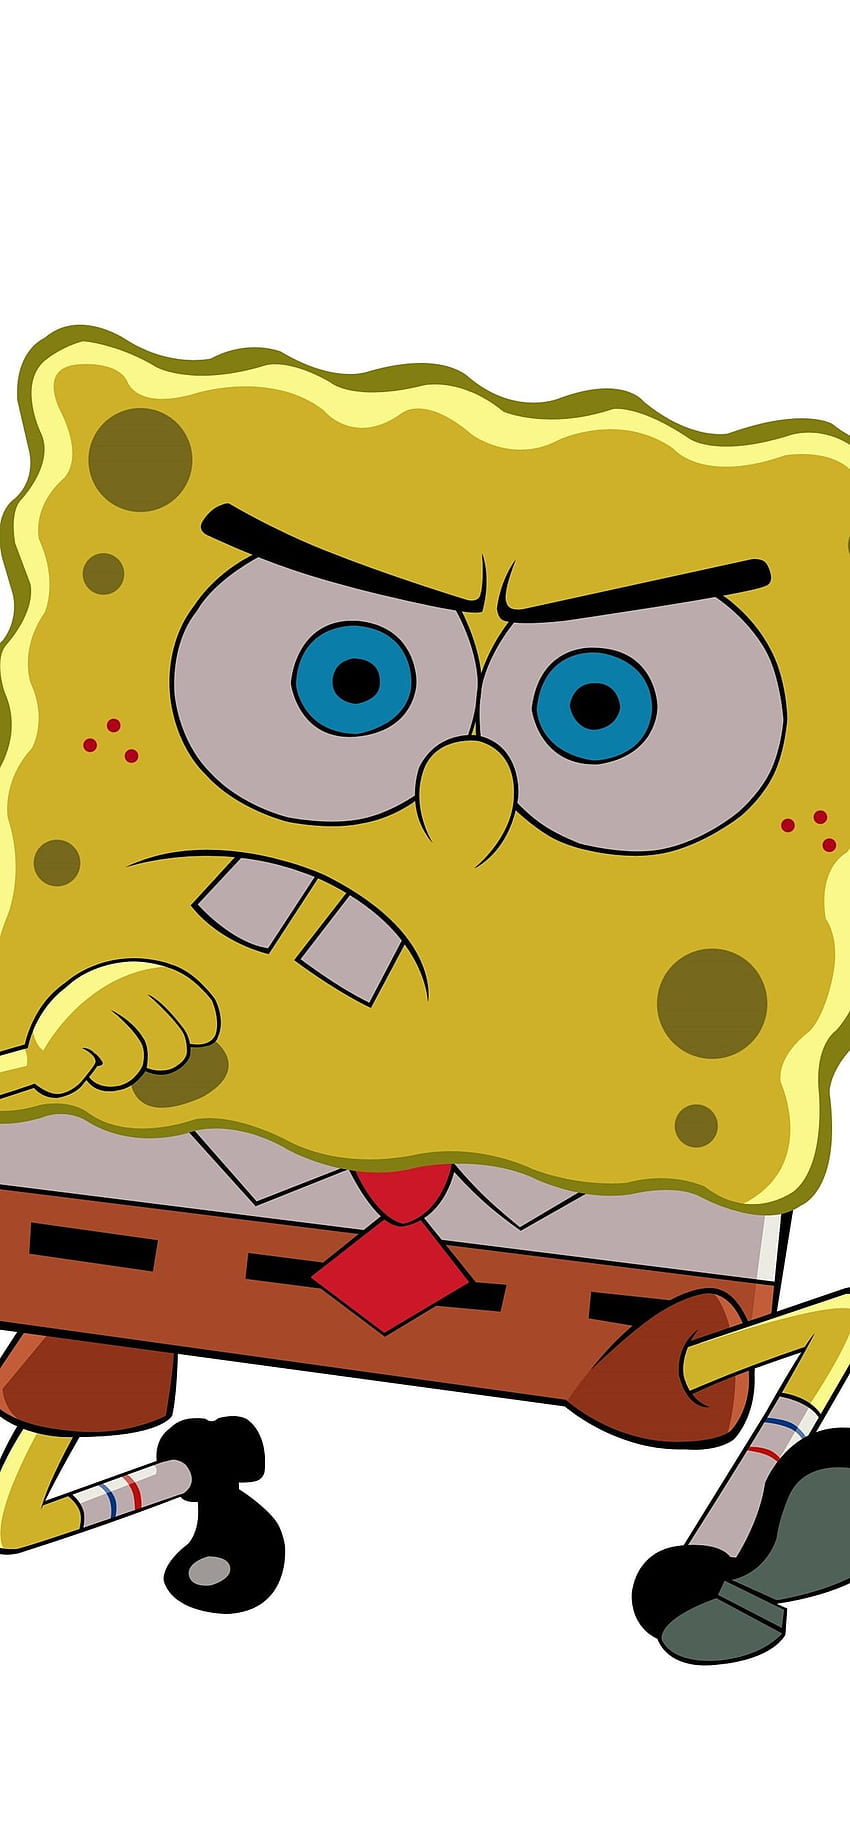 SpongeBob SquarePants Anime Human by kaysxart on DeviantArt